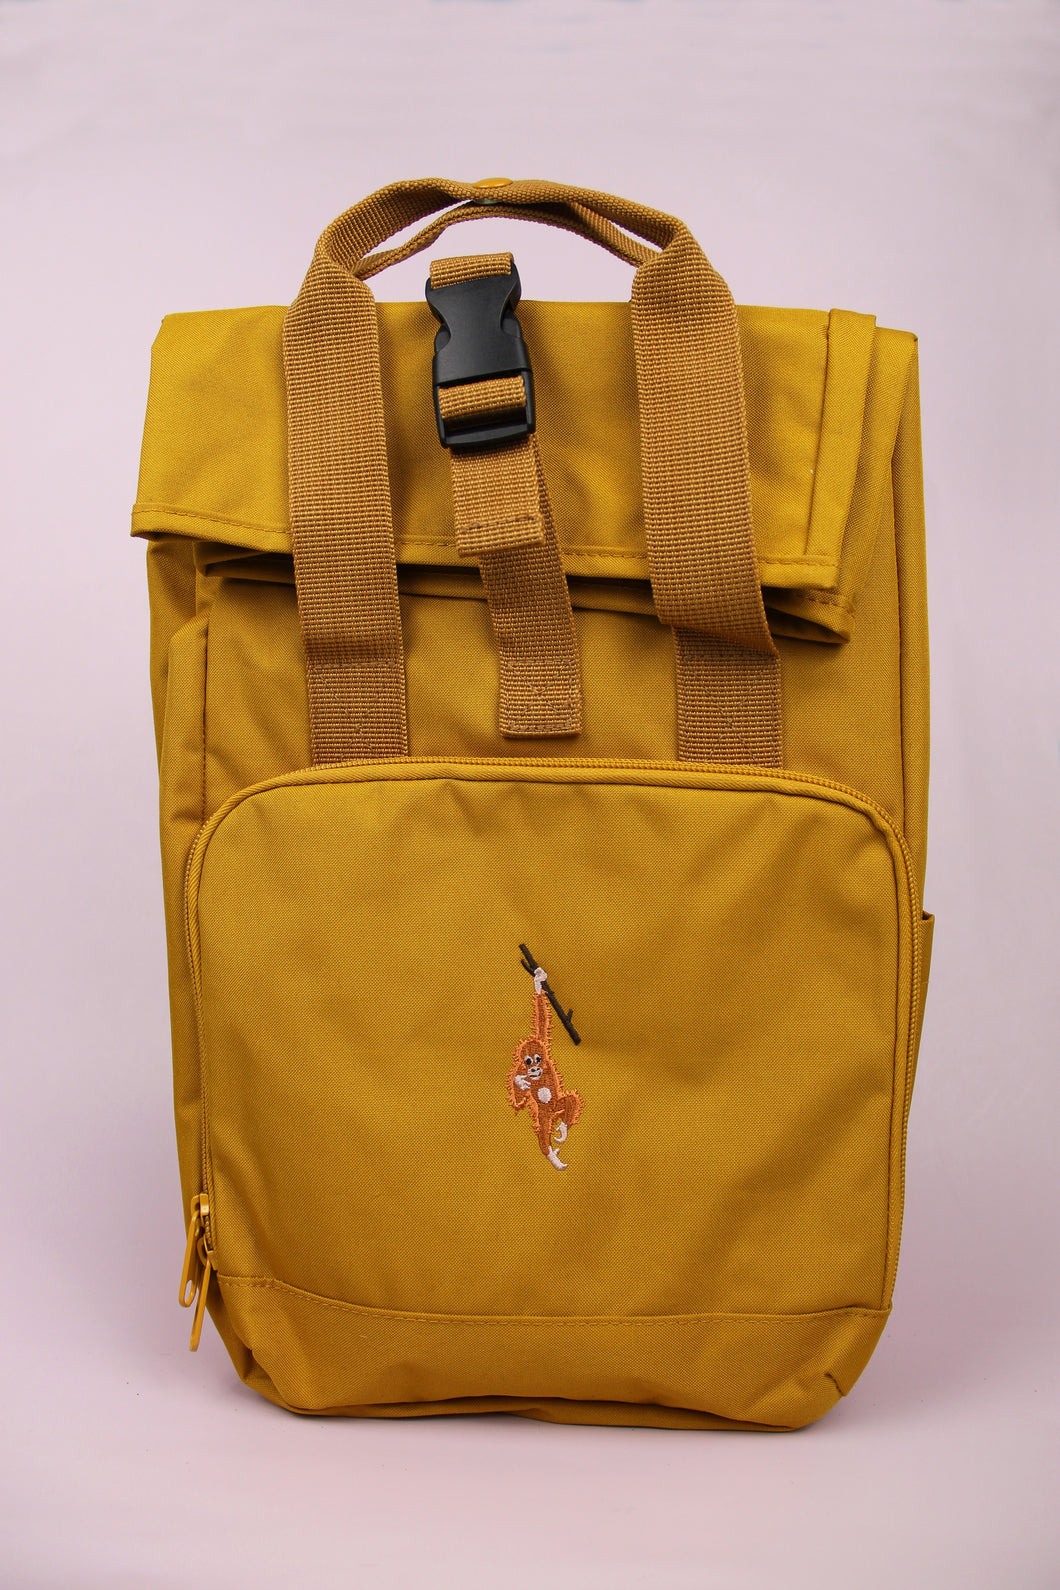 Orangutan Recycled Backpack - Mustard